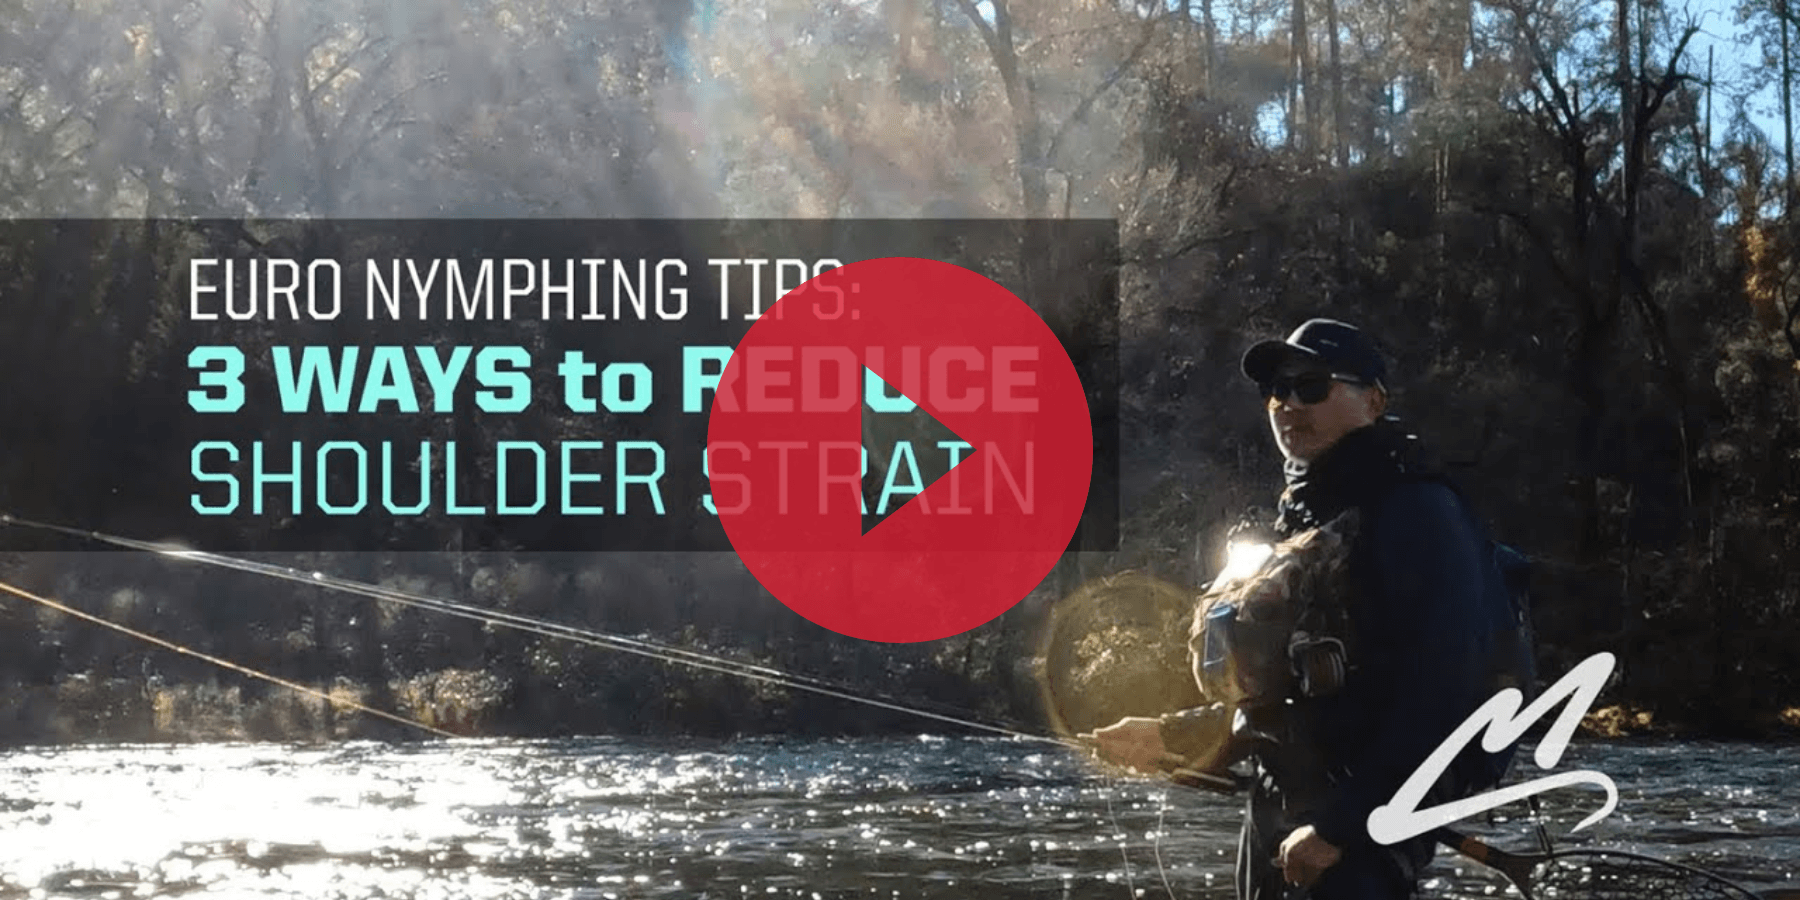 3 euro nymphing tips for reducing shoulder fatigue when fishing long dead drifts.